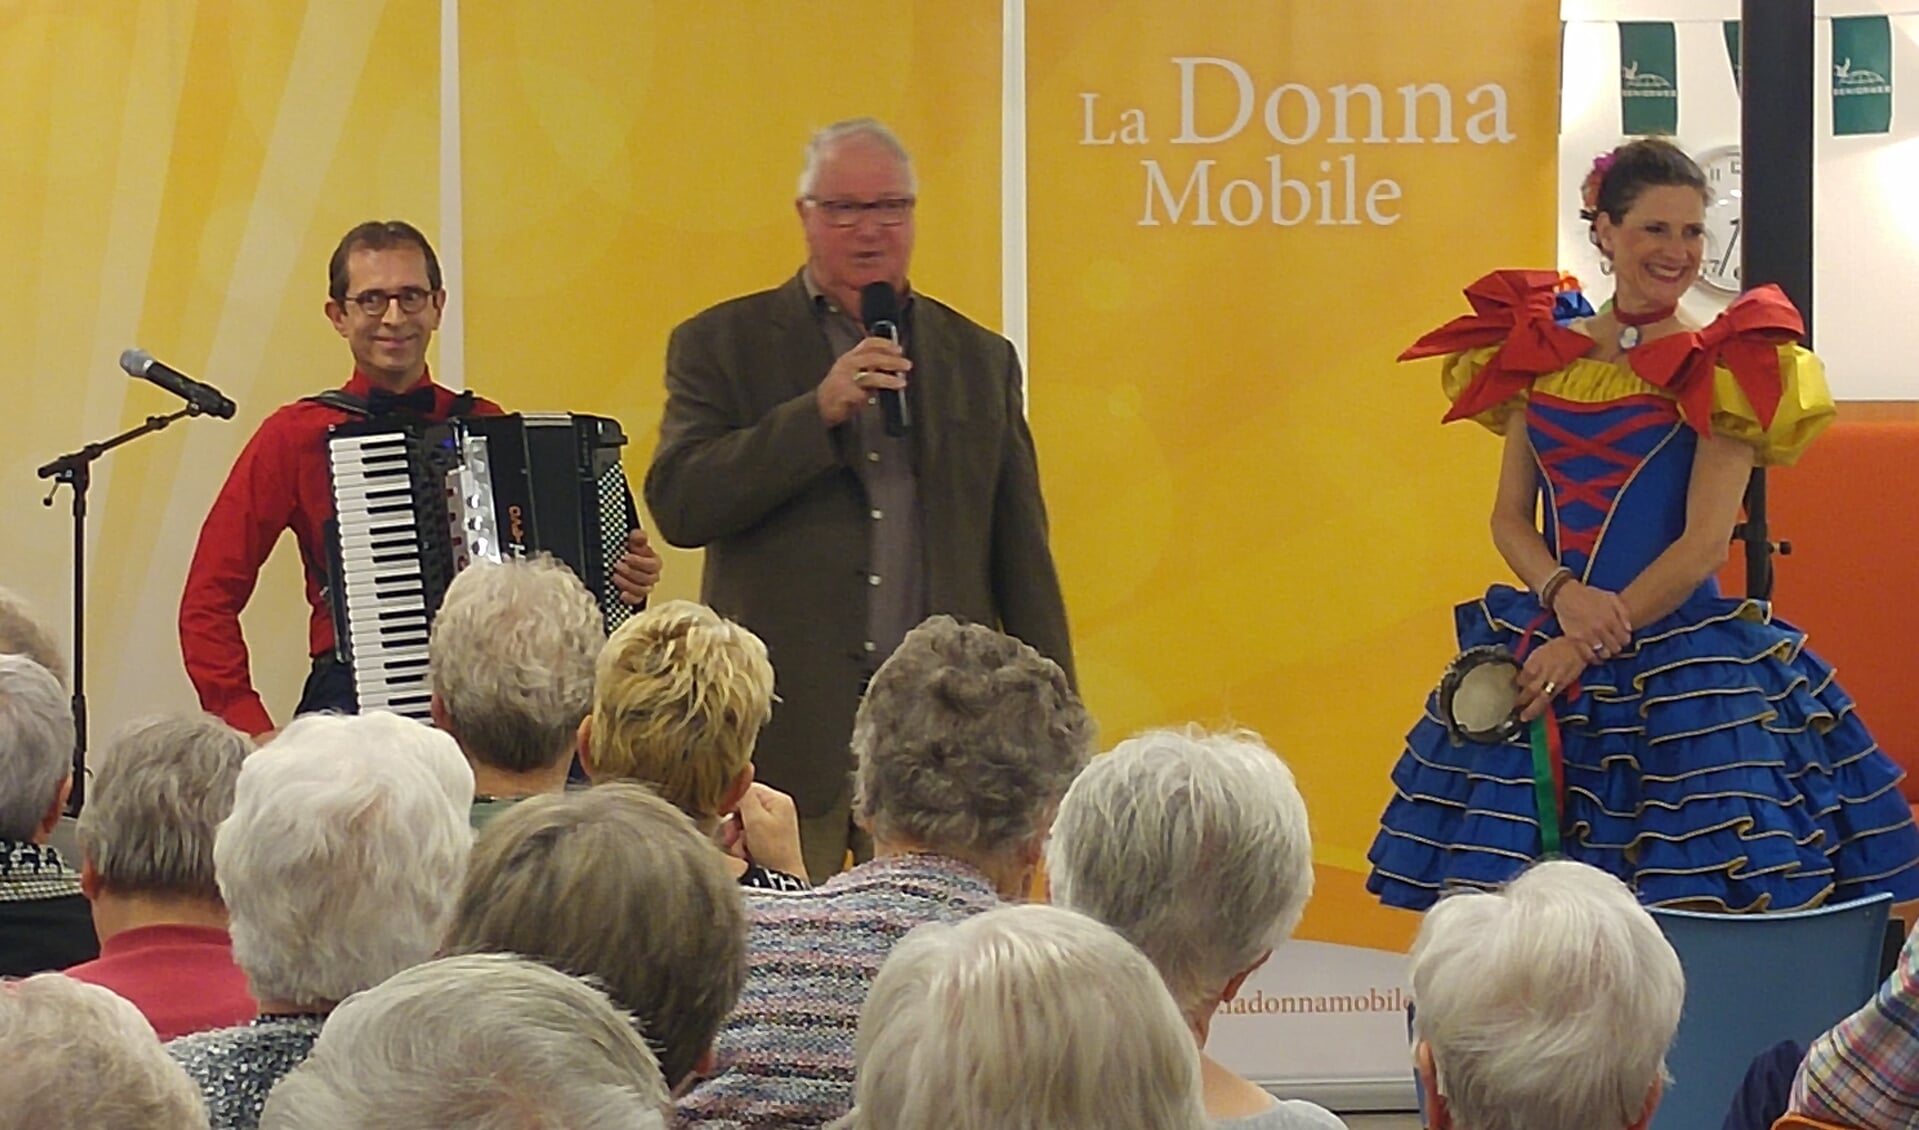 Voorzitter Frits Velker verwelkomt leden en kondigt optreden La Donna Mobile aan.